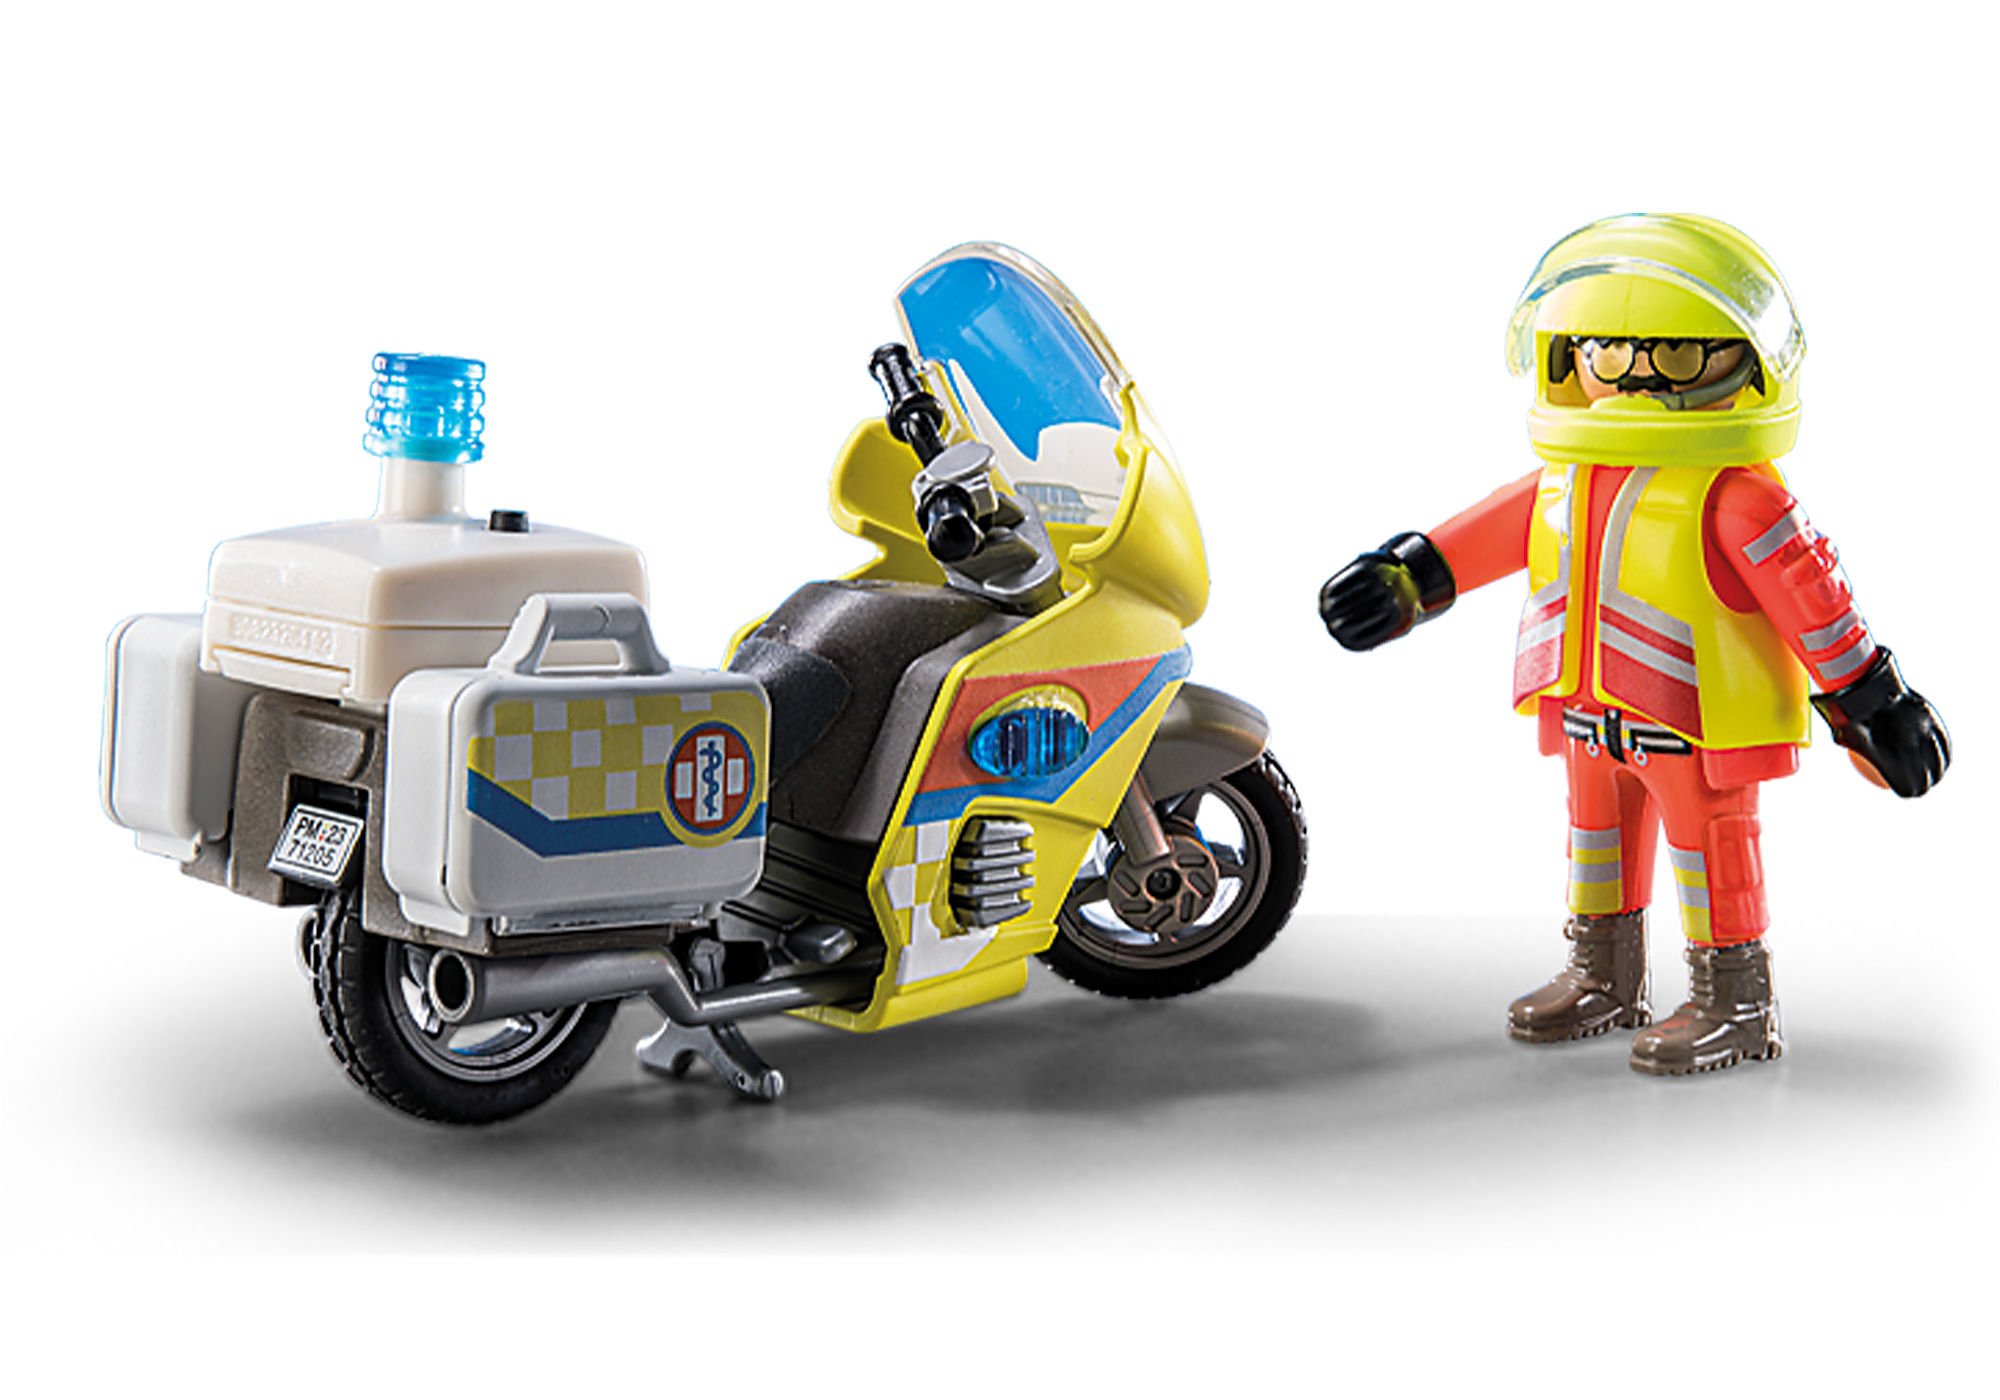 Playmobil City Life Motocyclette de médecin urgentiste avec